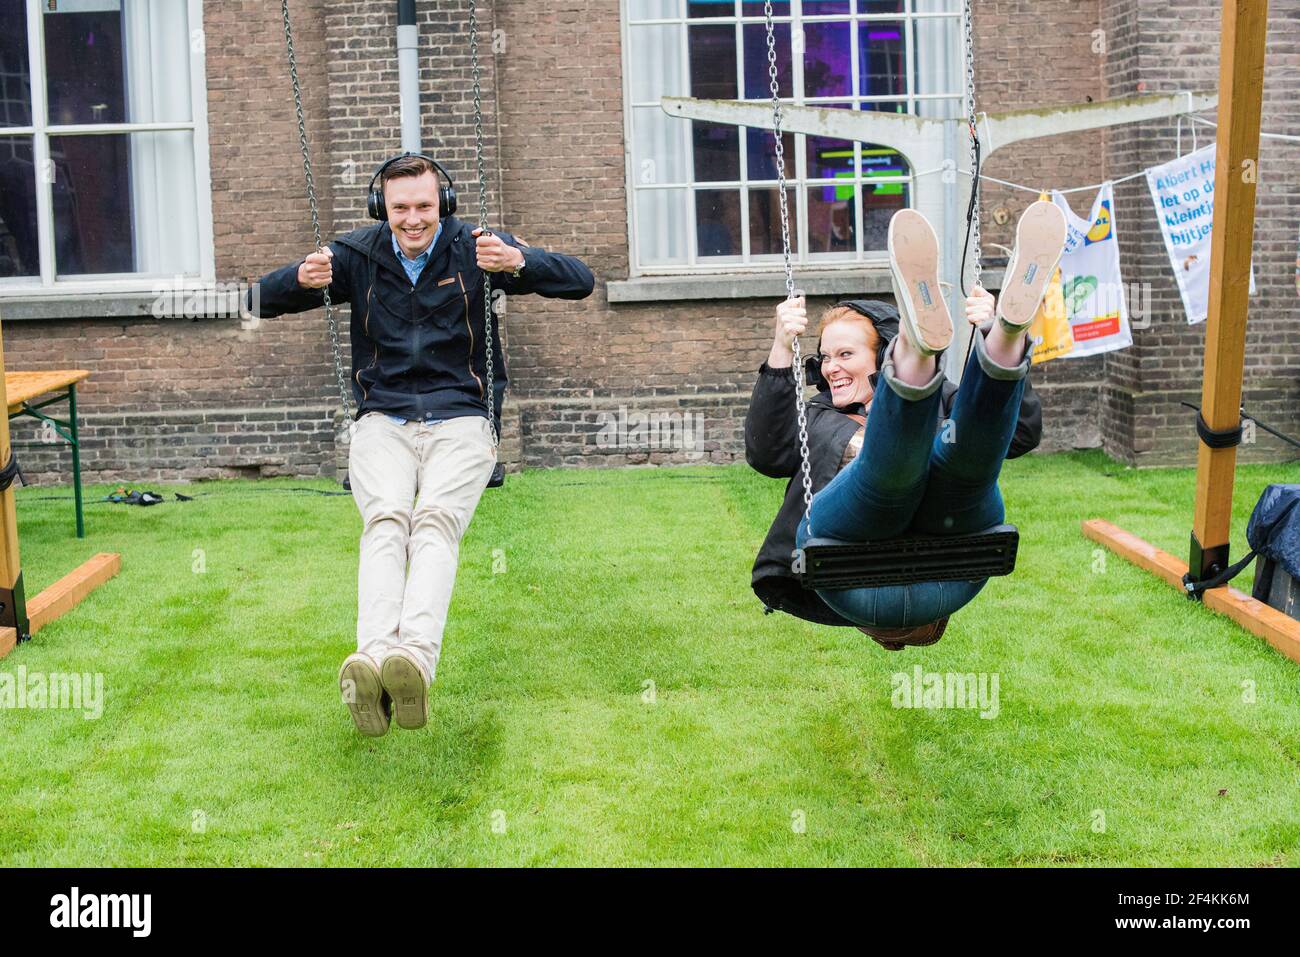 Tilburg, Nederland. Twee bezoekers van Festival Mundial 2016 leven zich uit op schommels. Tilburg, Netherlands. Two visitors to Festival Mundial 2016 enjoying themselves on a pair of swings. Stock Photo